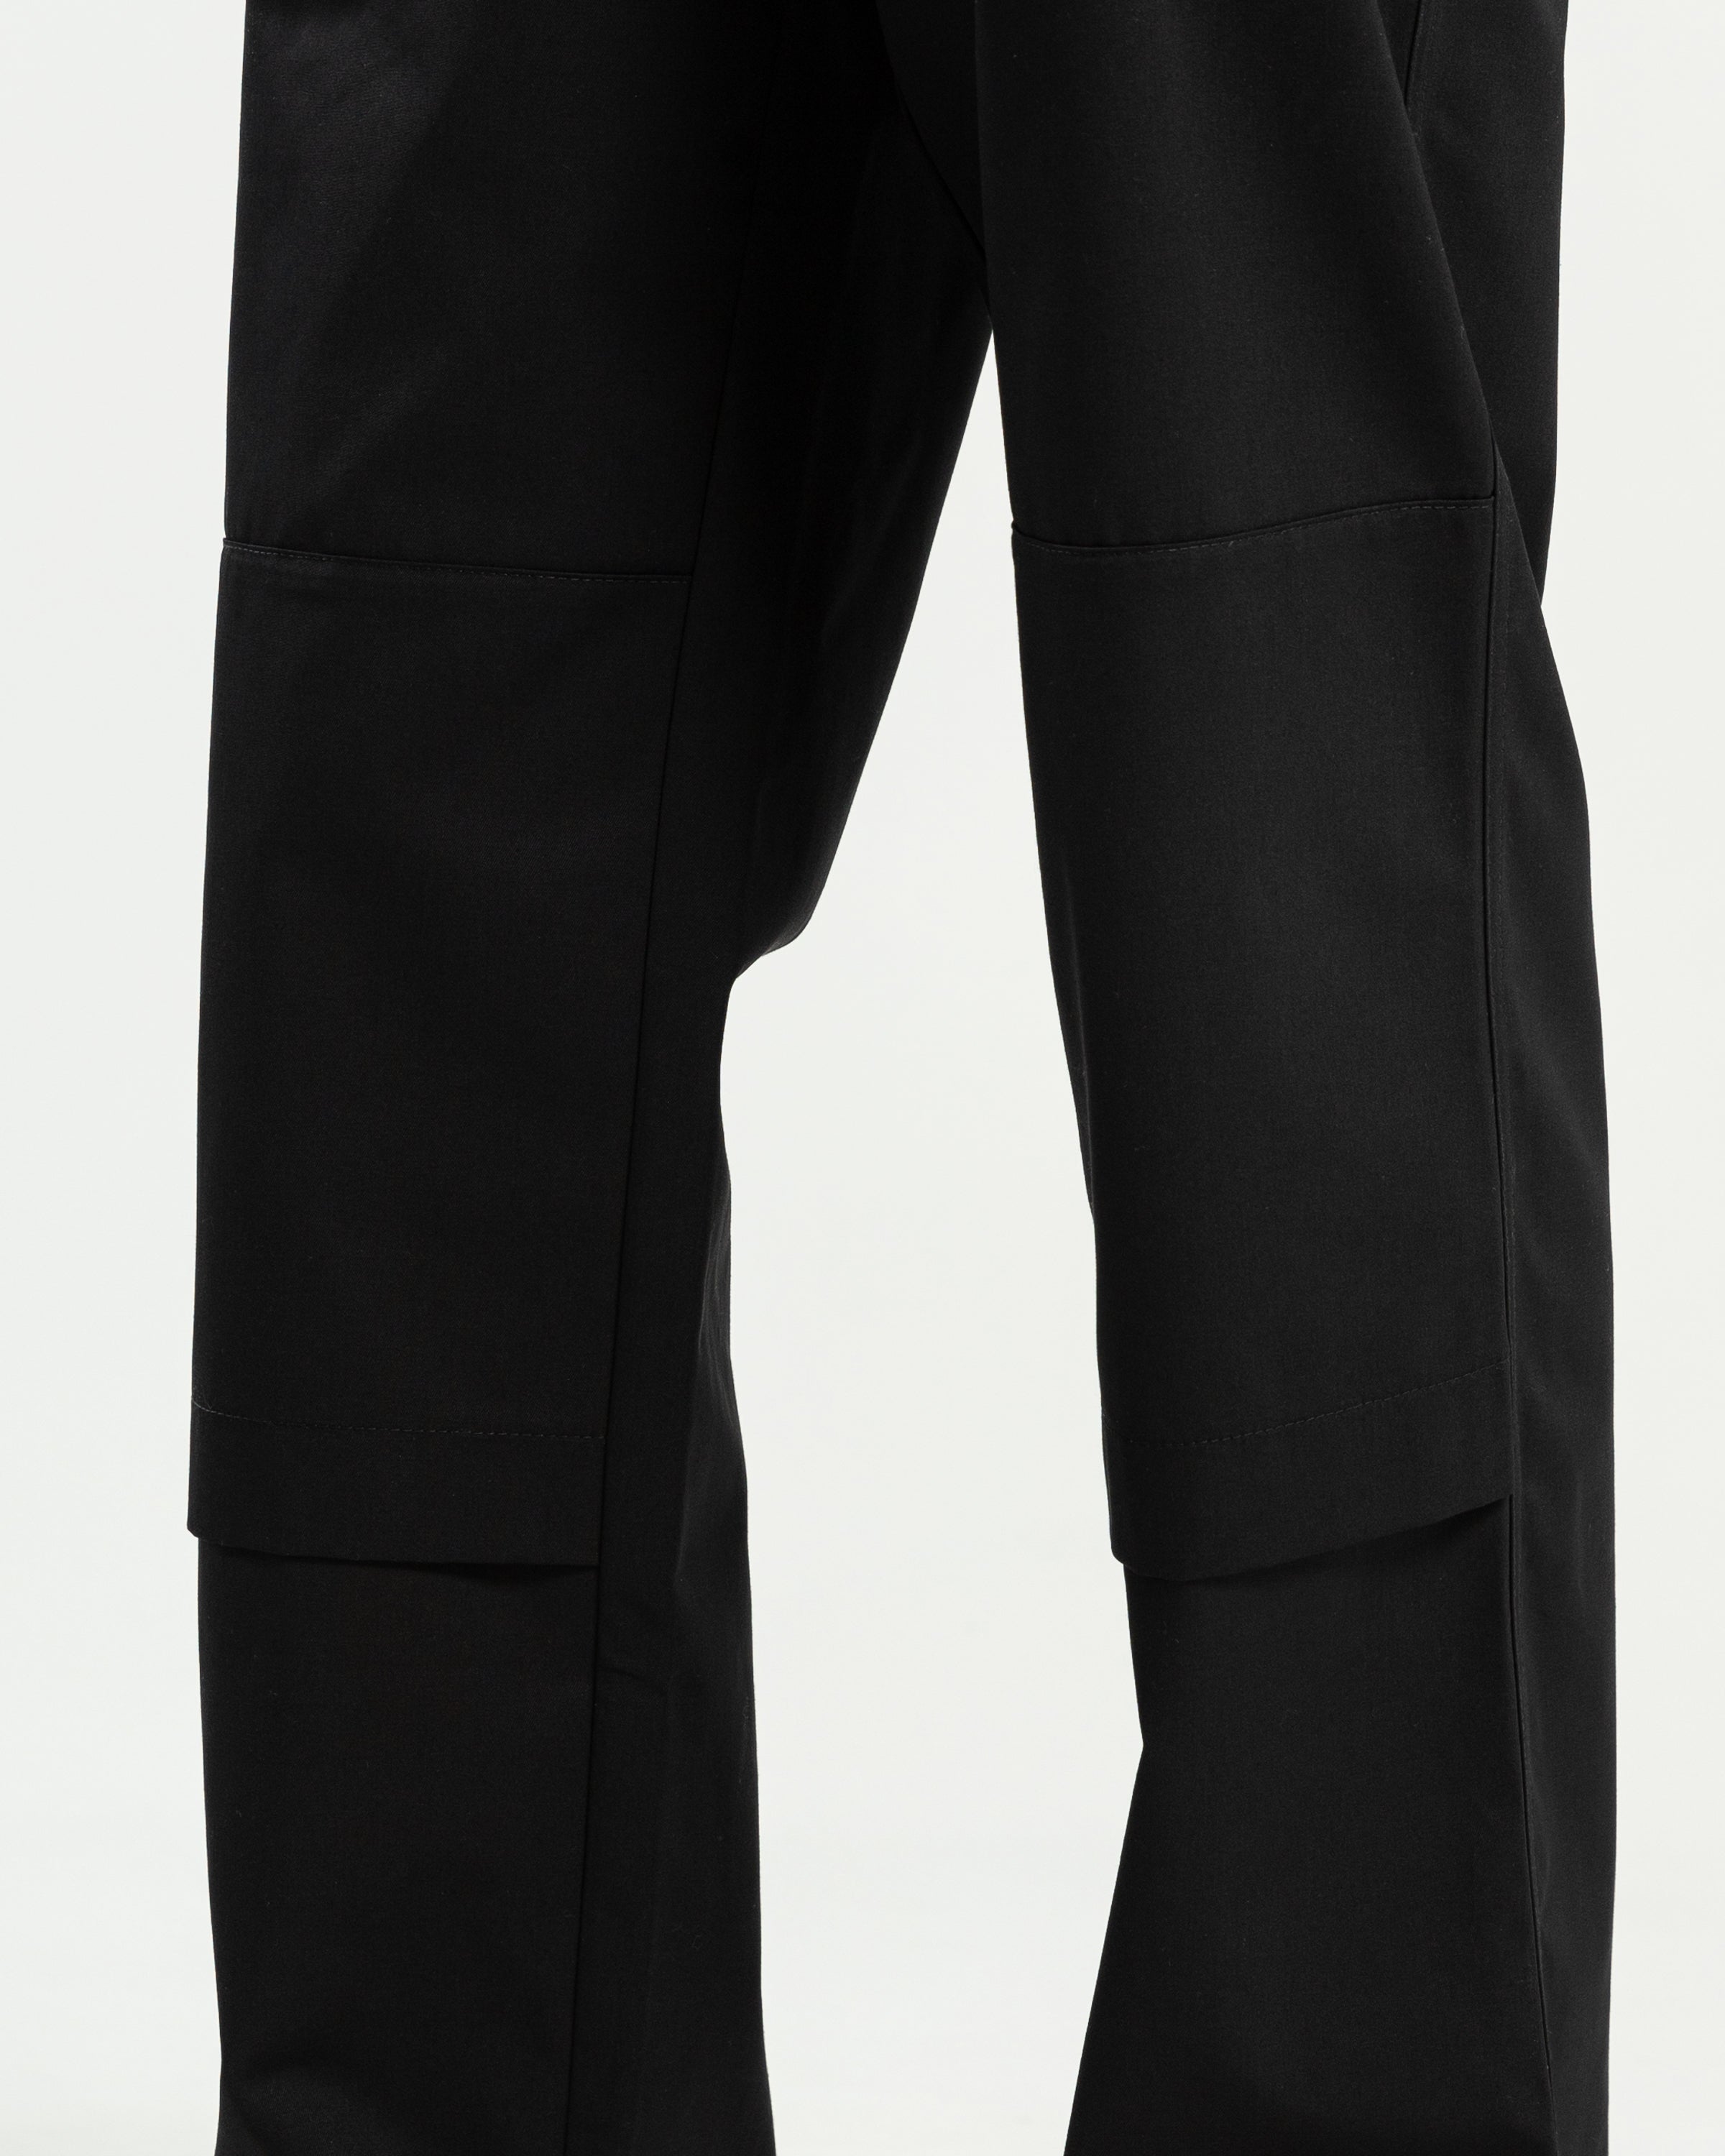 Replicated Light KLM Pants in Black